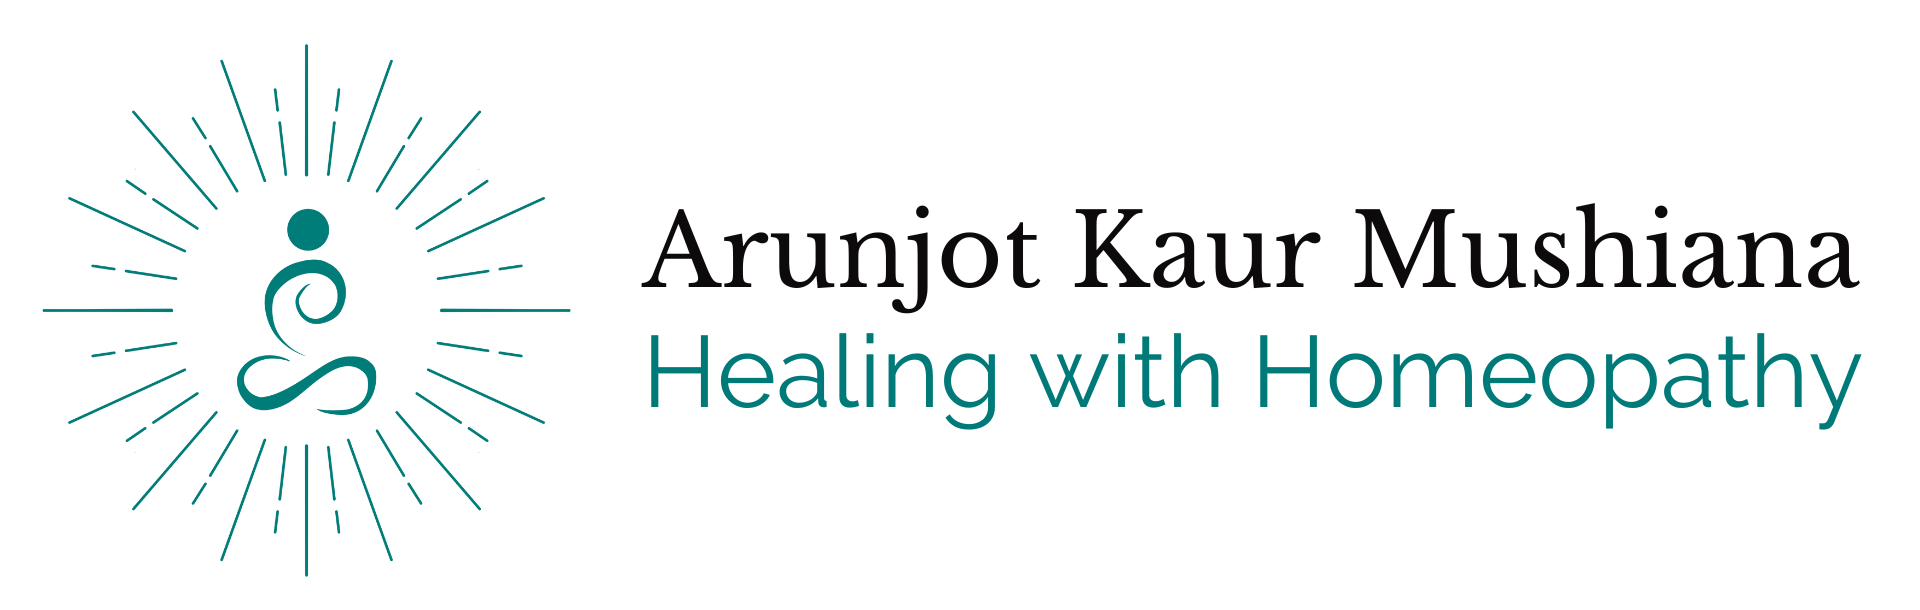 Arunjot-Kaur-Mushiana-homeopathy-breathwork-holistic-healing-meditation-well-being-puberty-aging-menopause-logo.png